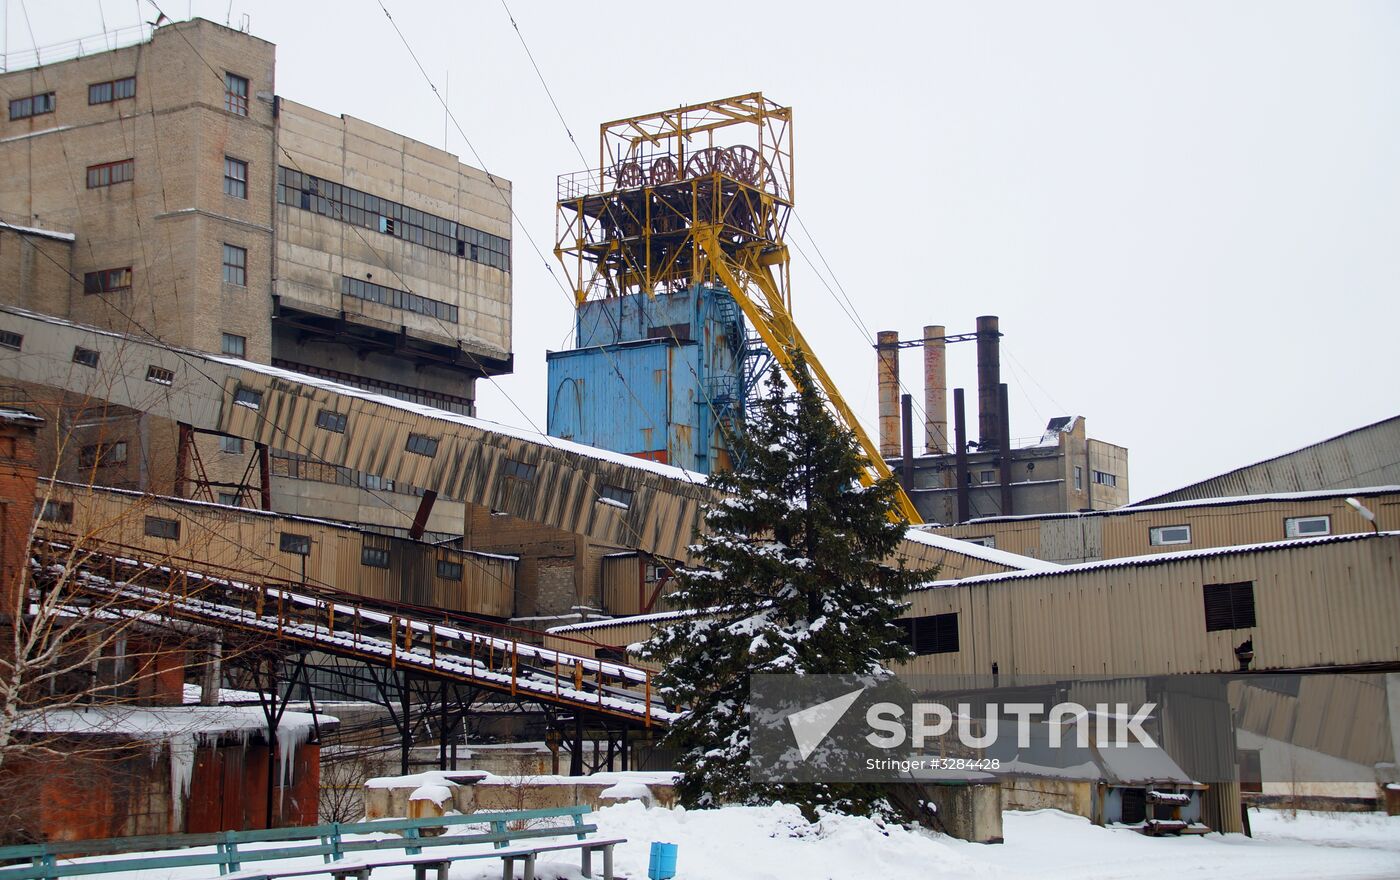 Belorechenskaya coal mine in Lugansk Region